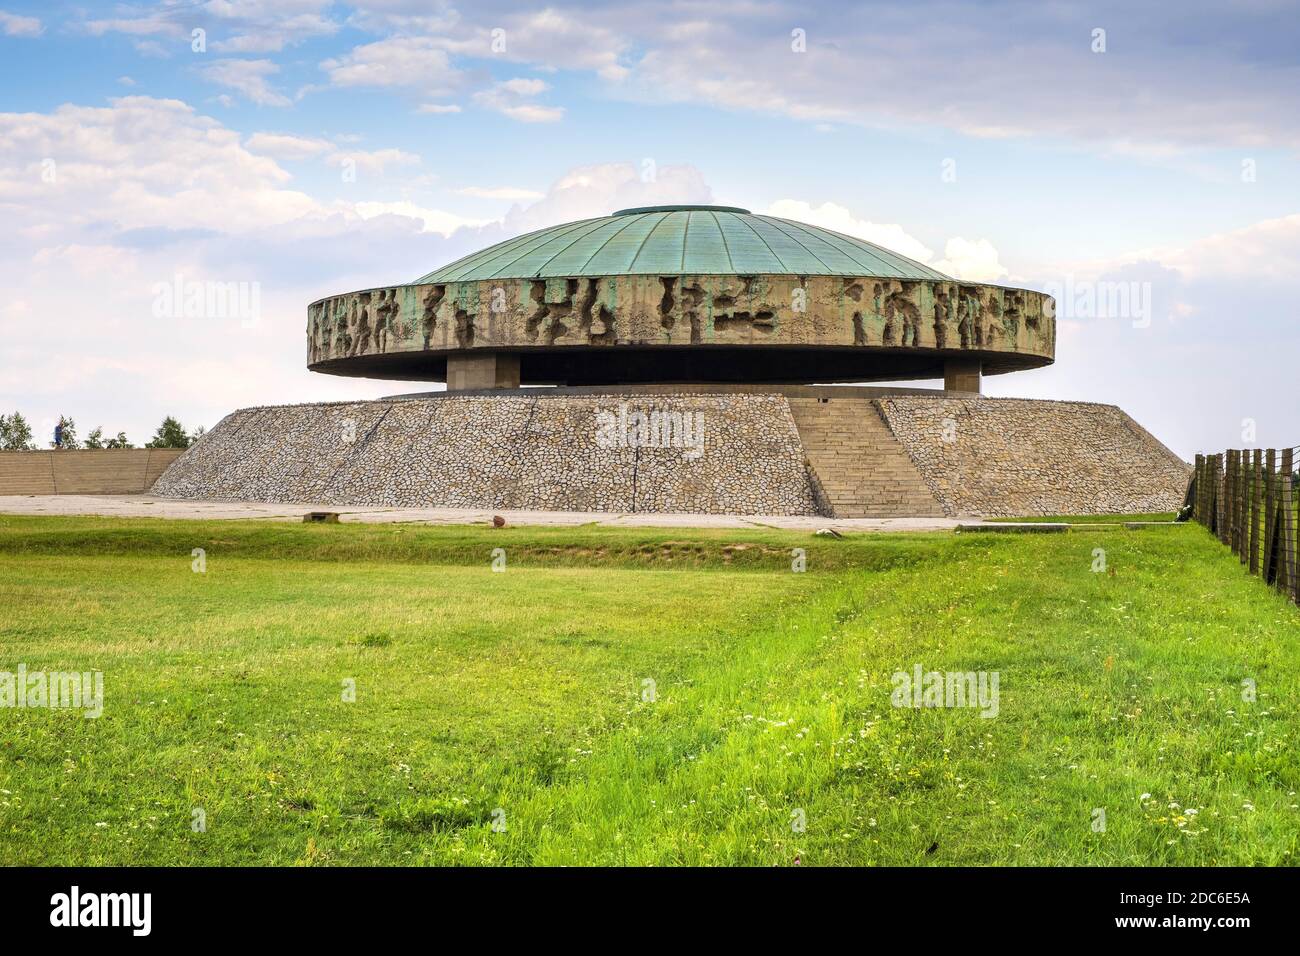 Lublin, Lubelskie/Polen - 2019/08/17: Mausoleum des Konzentrationslagers Majdanek KL Lublin für das Konzentrationslager und Vernichtungslager - Konzentrationslager Lublin - by Stockfoto